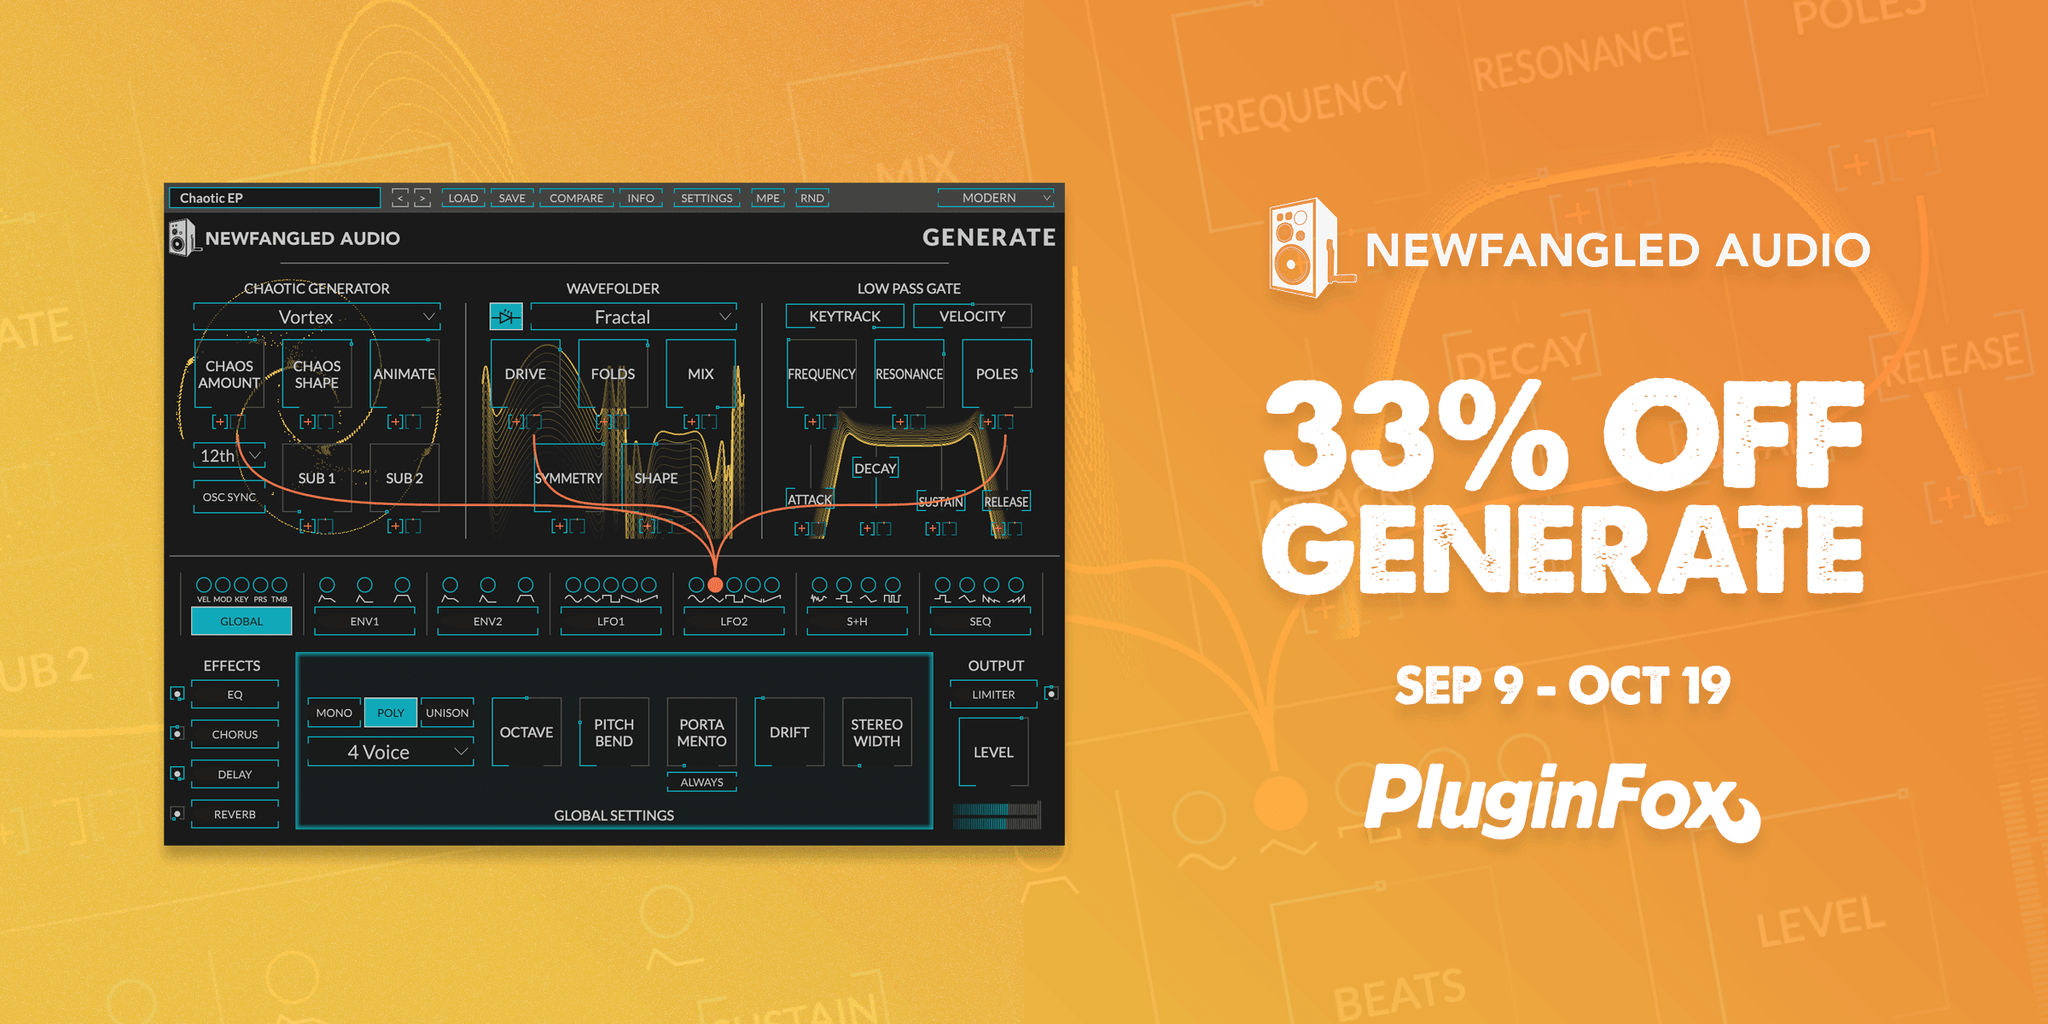 Newfangled Audio Generate Launch Sale - Sep 9 - Oct 19